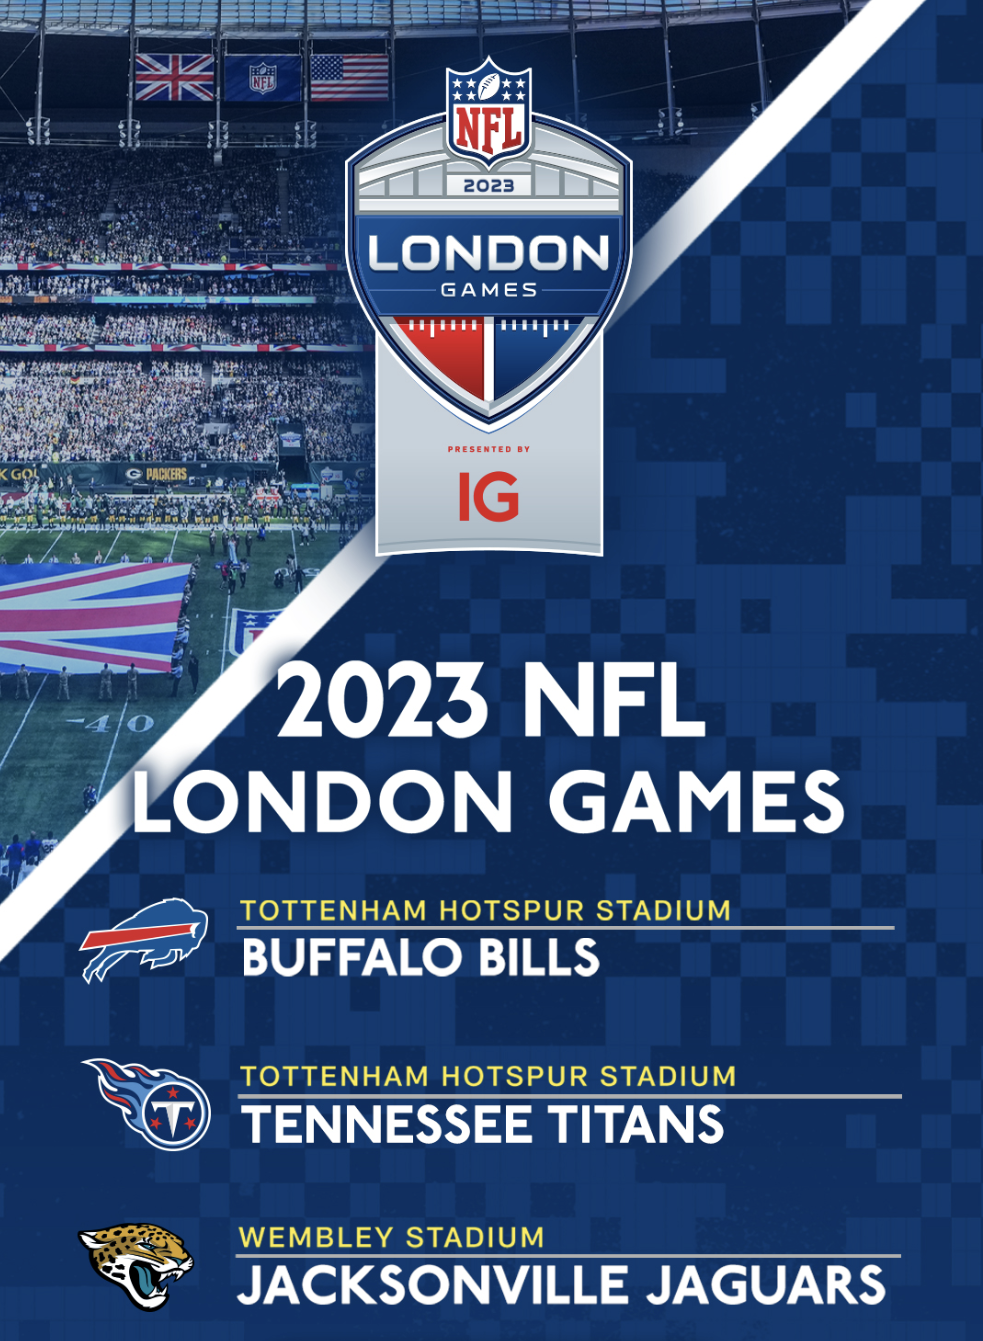 2023 NFL London Games Announced